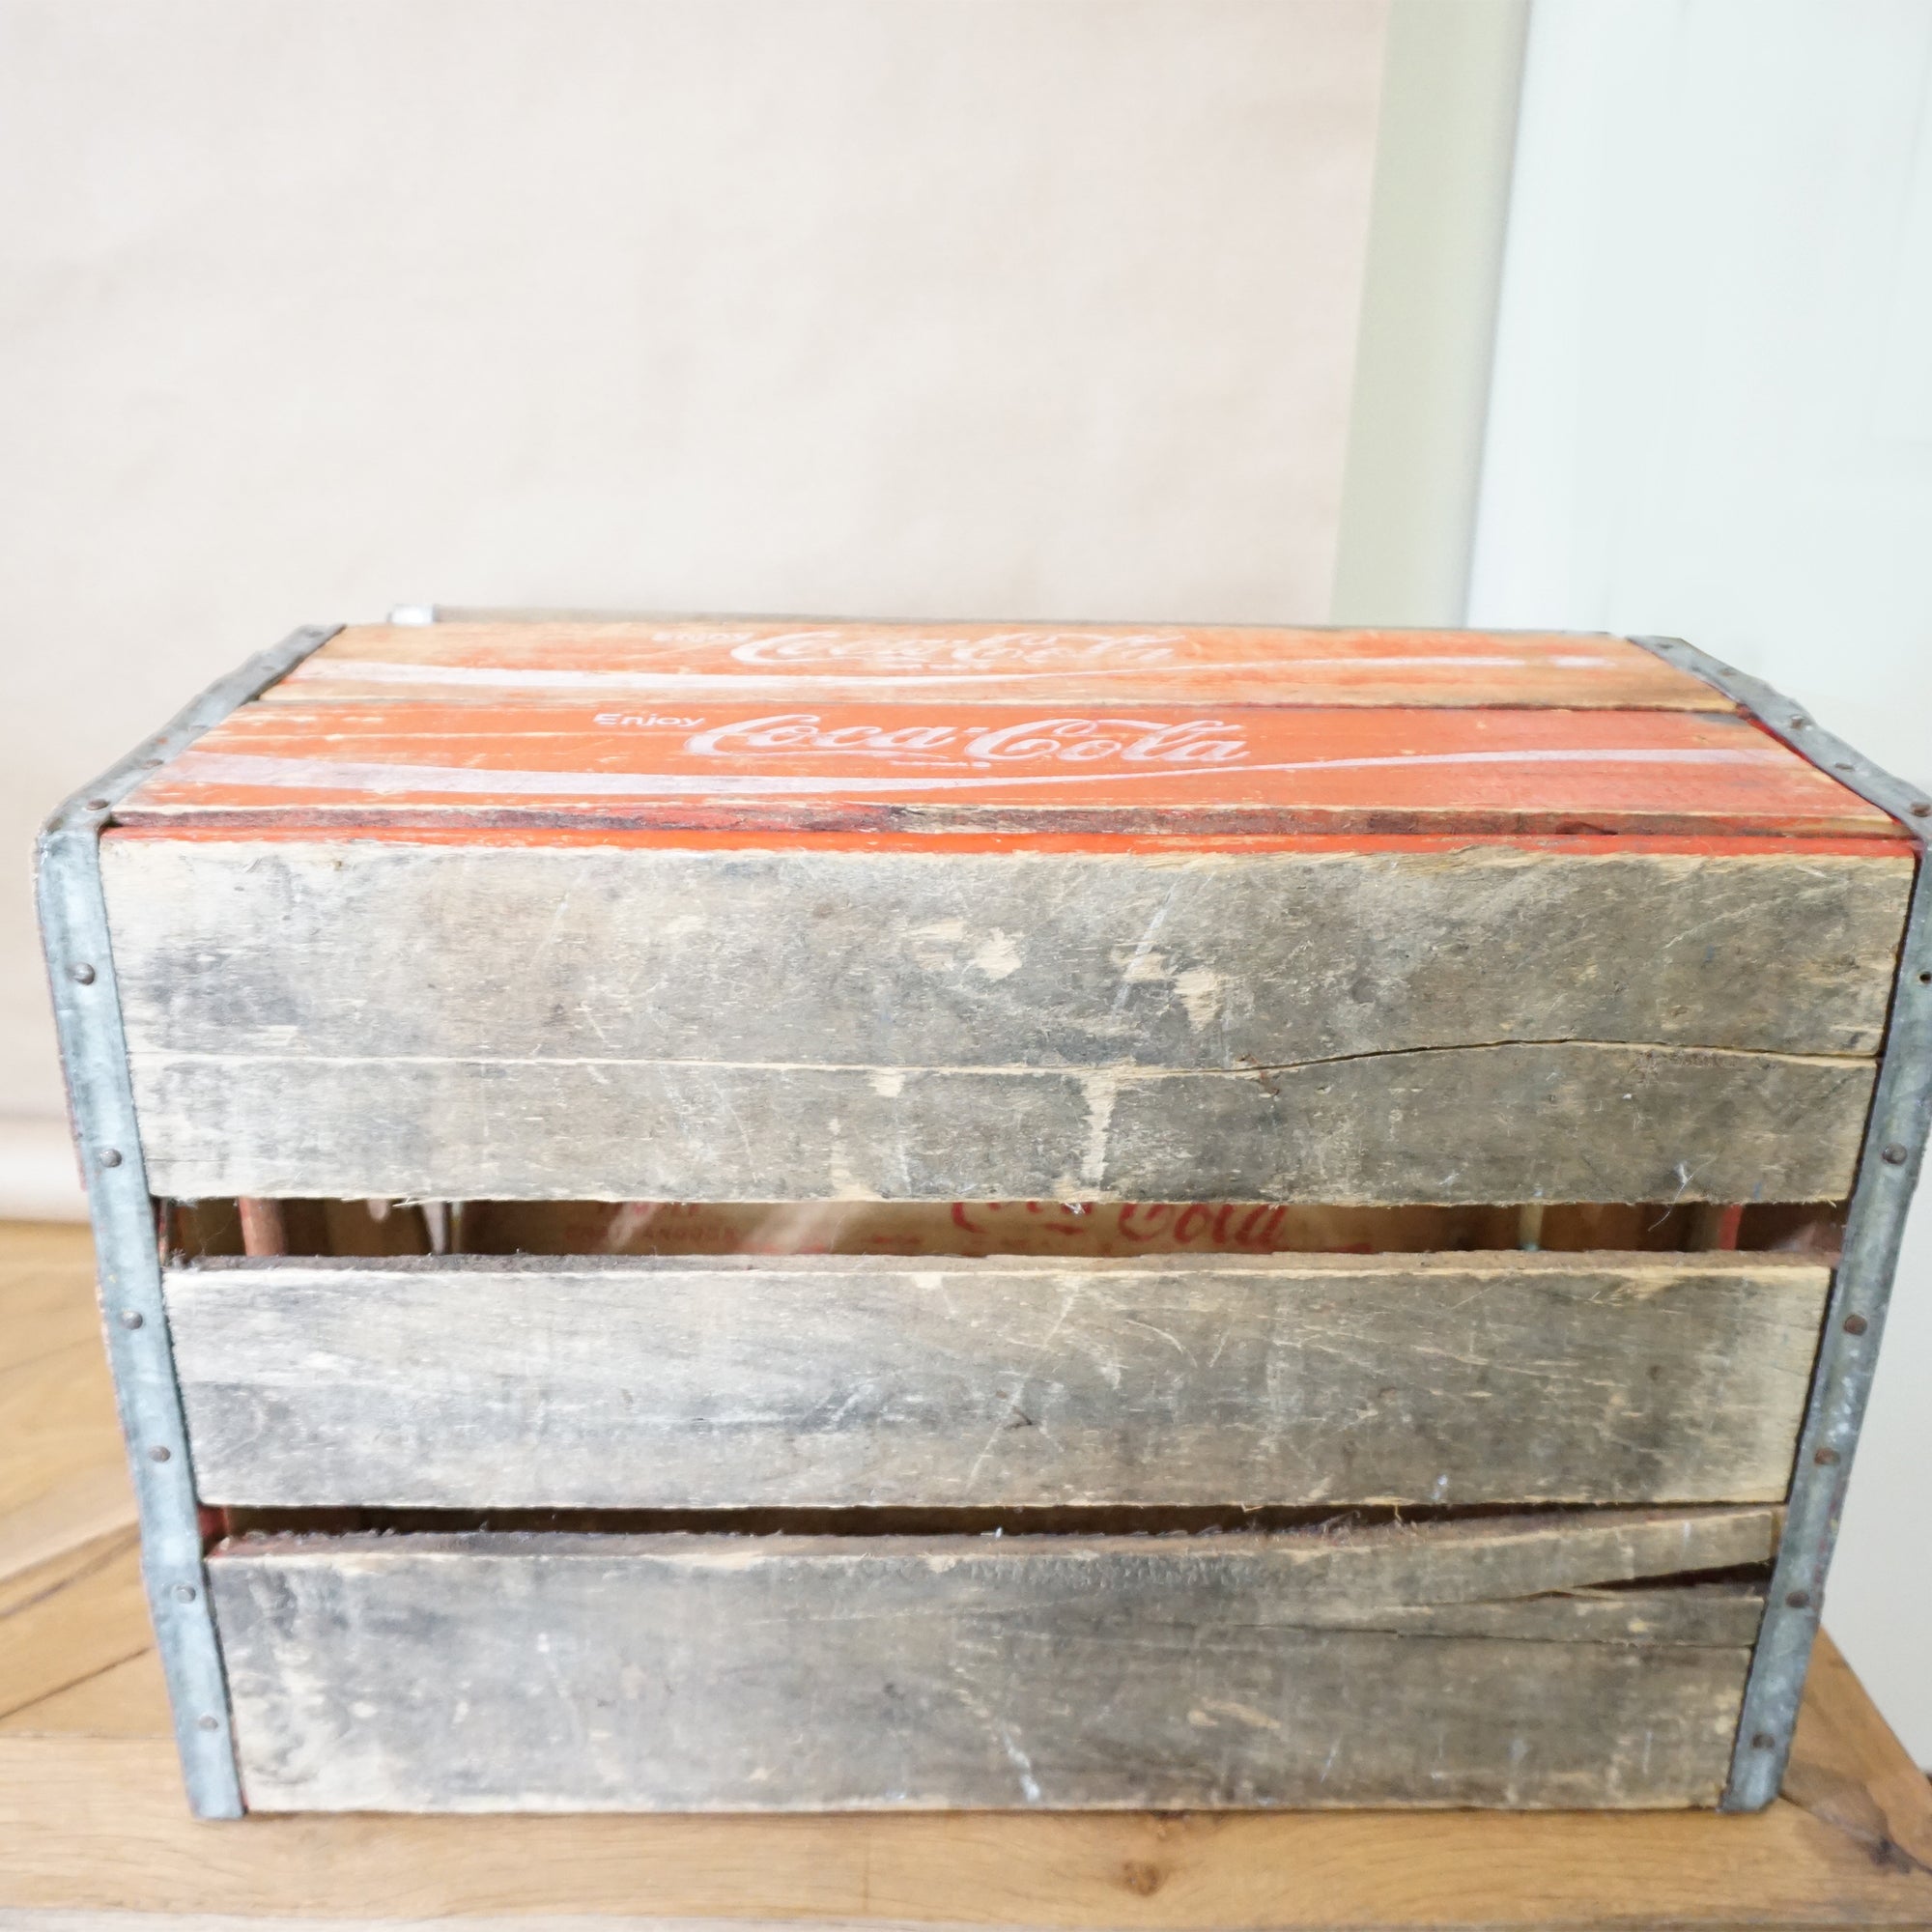 1977 Vintage COCA-COLA Temple-Cattanooga Wooden Case / Crate / Box